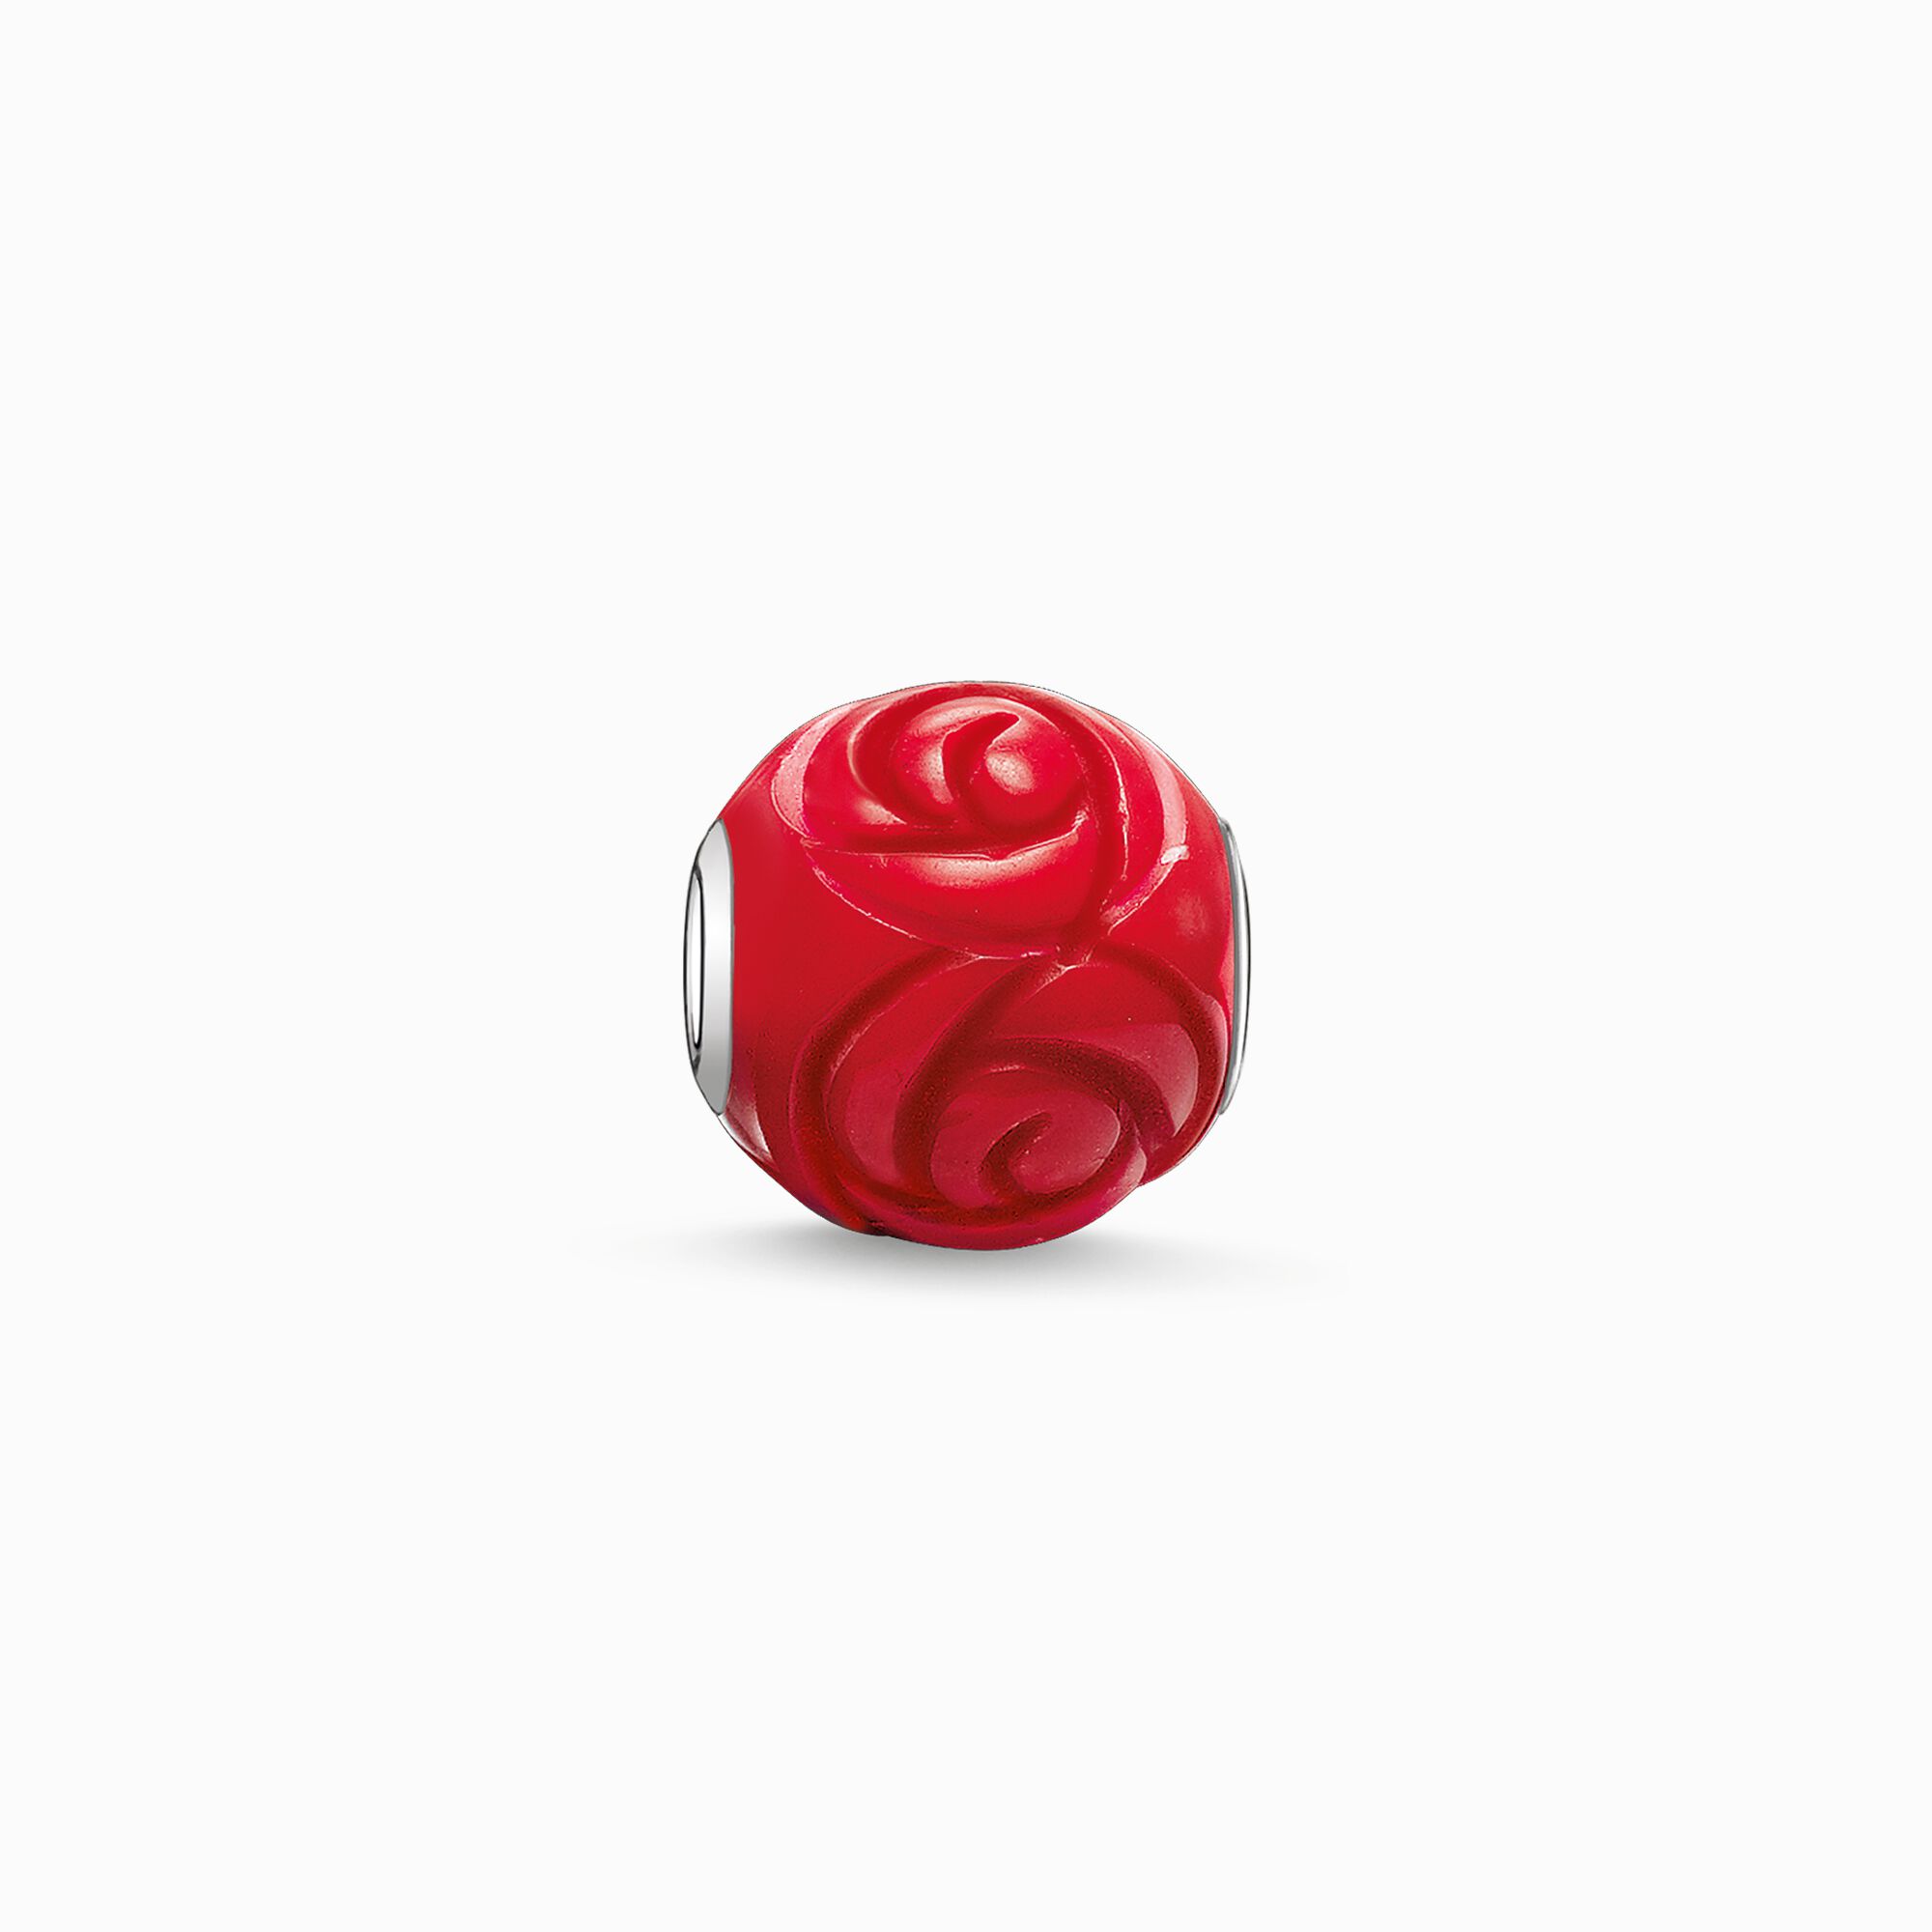 Bead Rote Rose aus der Karma Beads Kollektion im Online Shop von THOMAS SABO